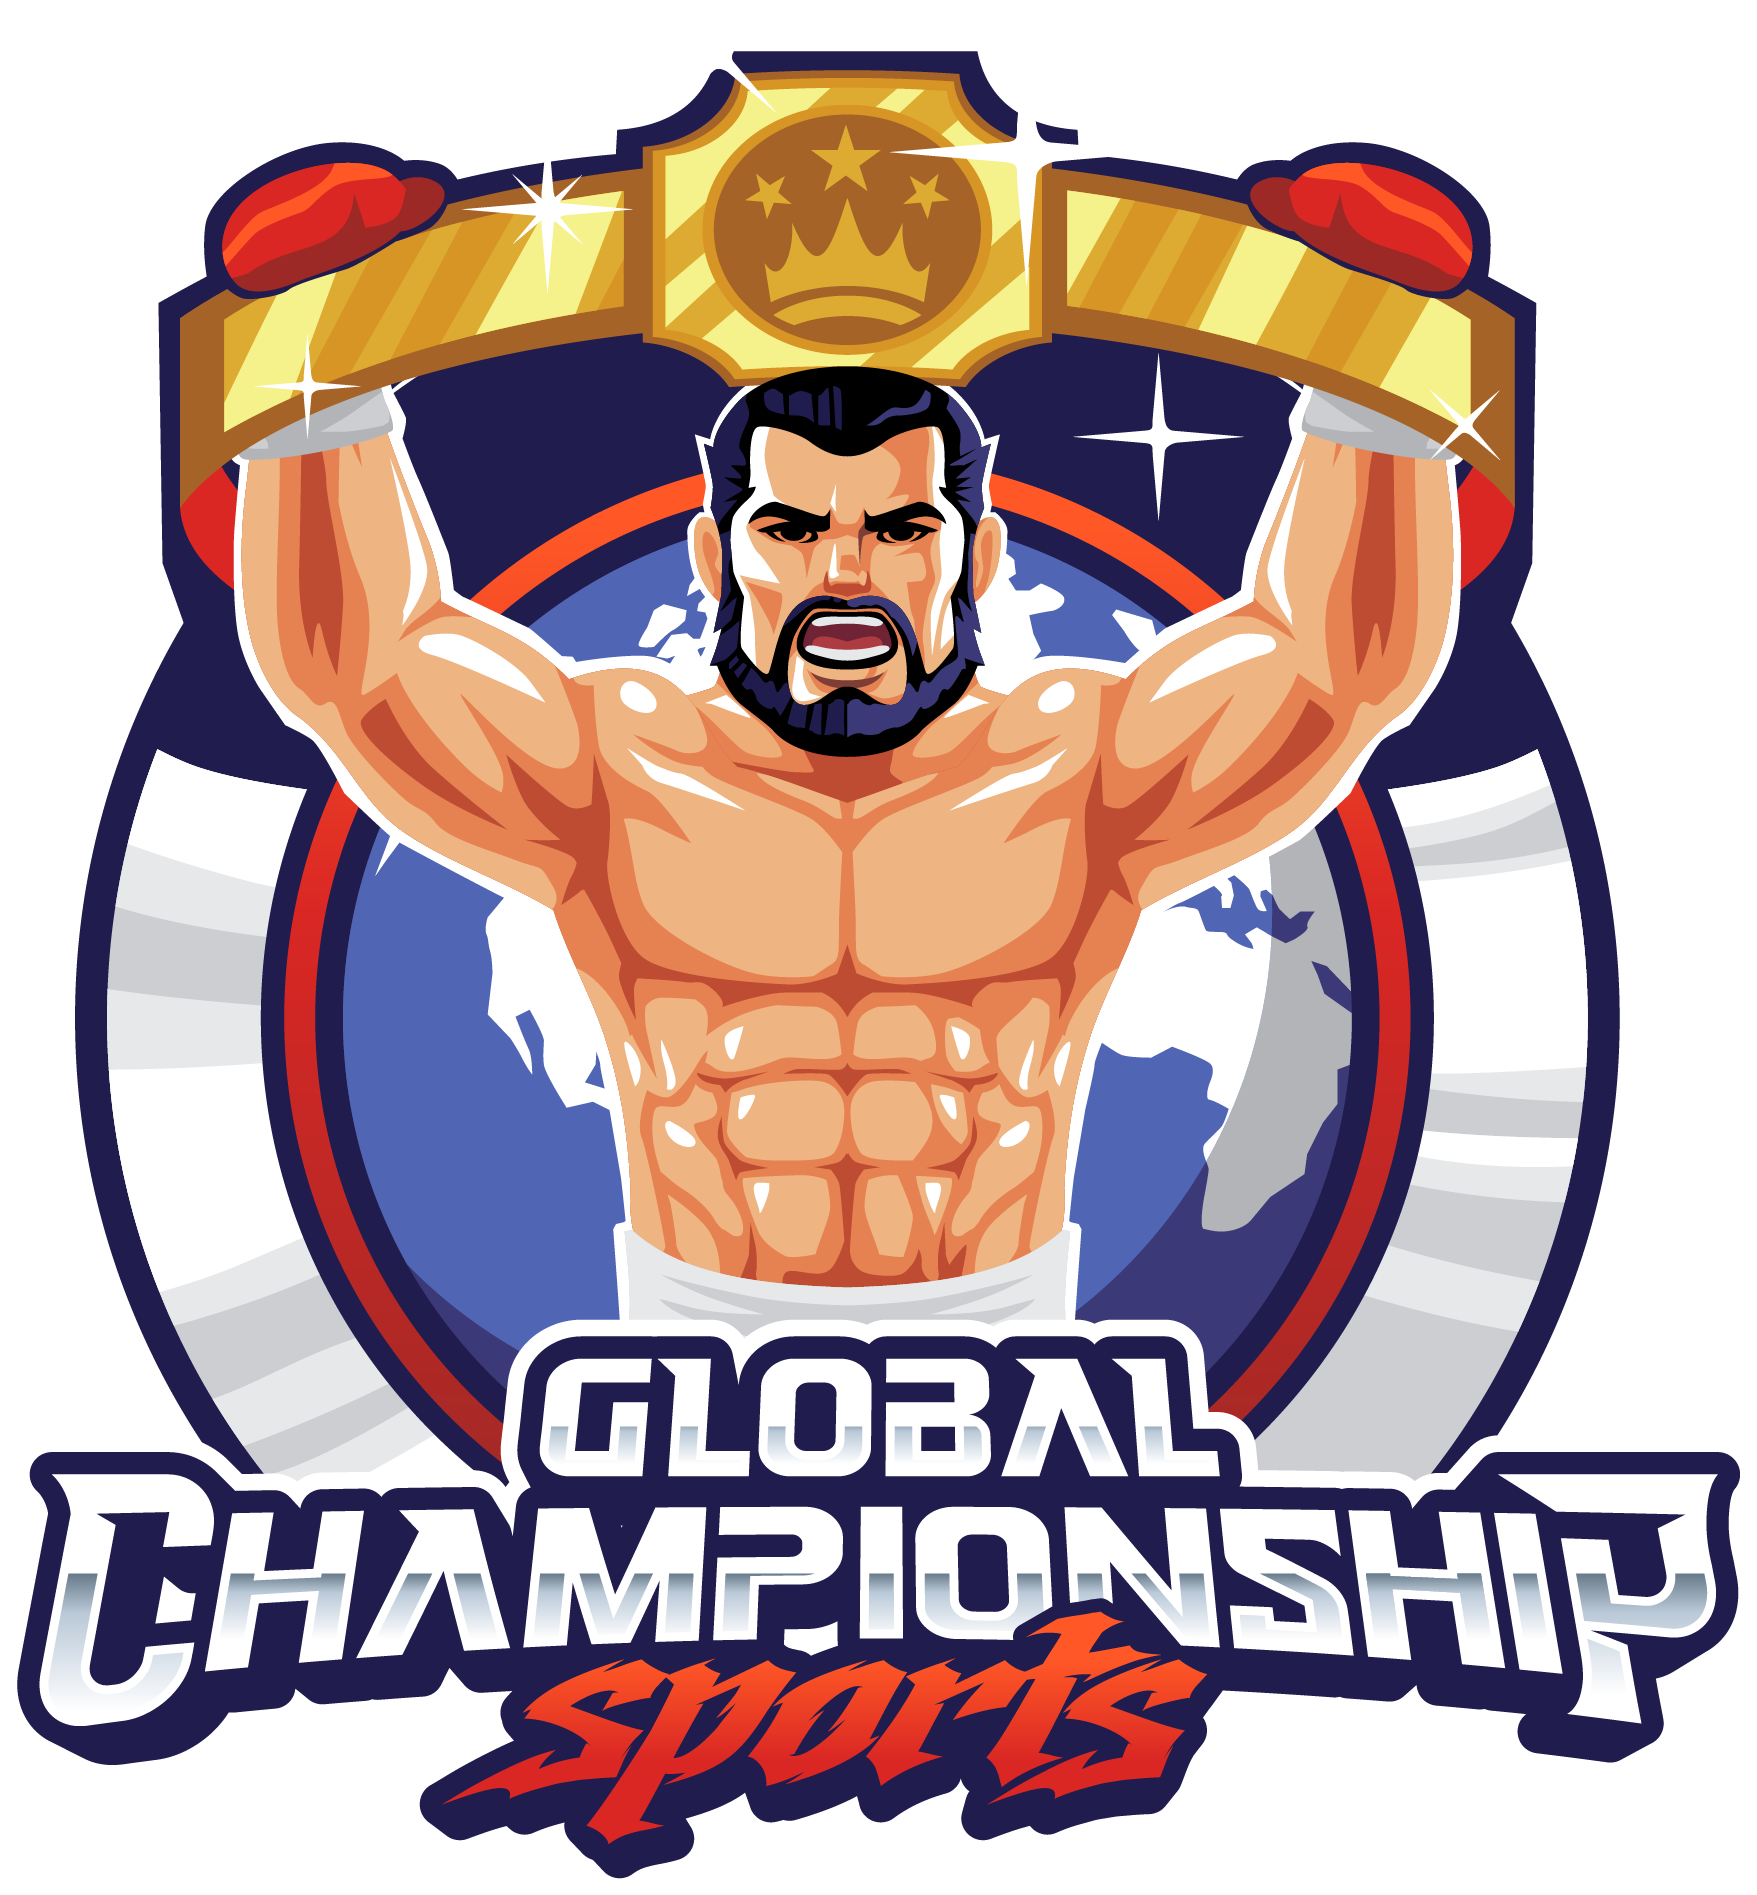 GlobalChampionshipSports